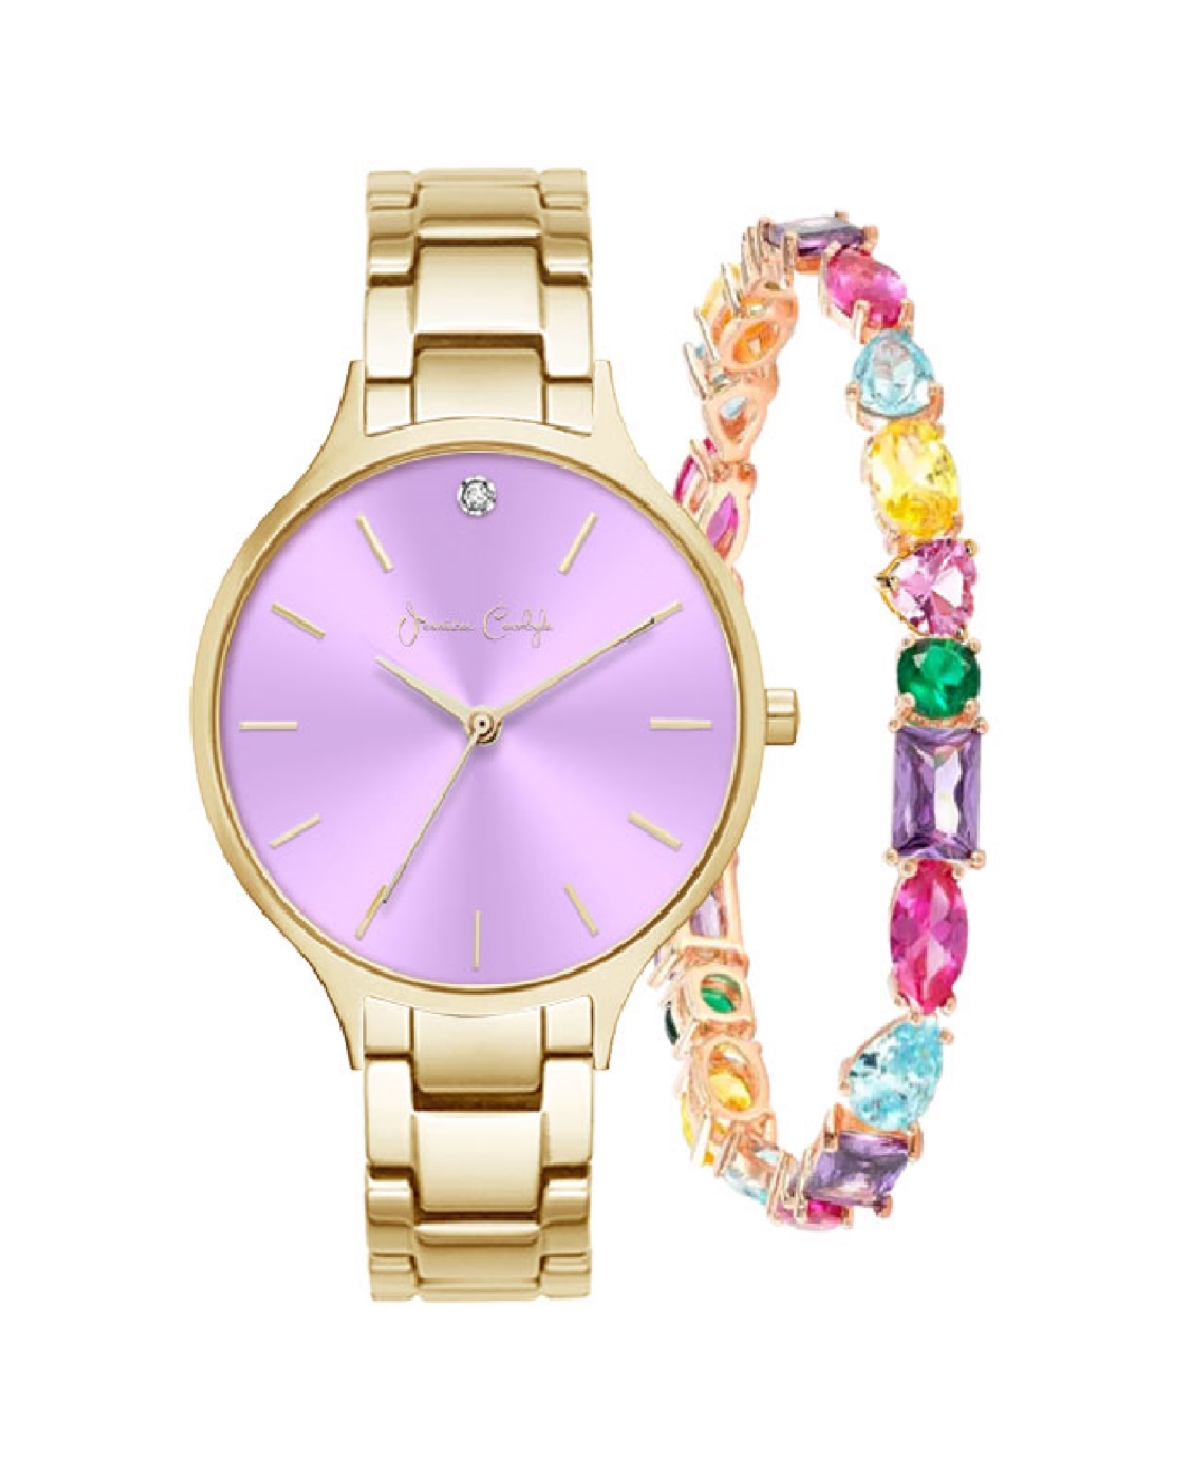 Women's Quartz Gold-Tone Alloy Bracelet Watch 36mm Gift Set - Shiny Gold, Lavender